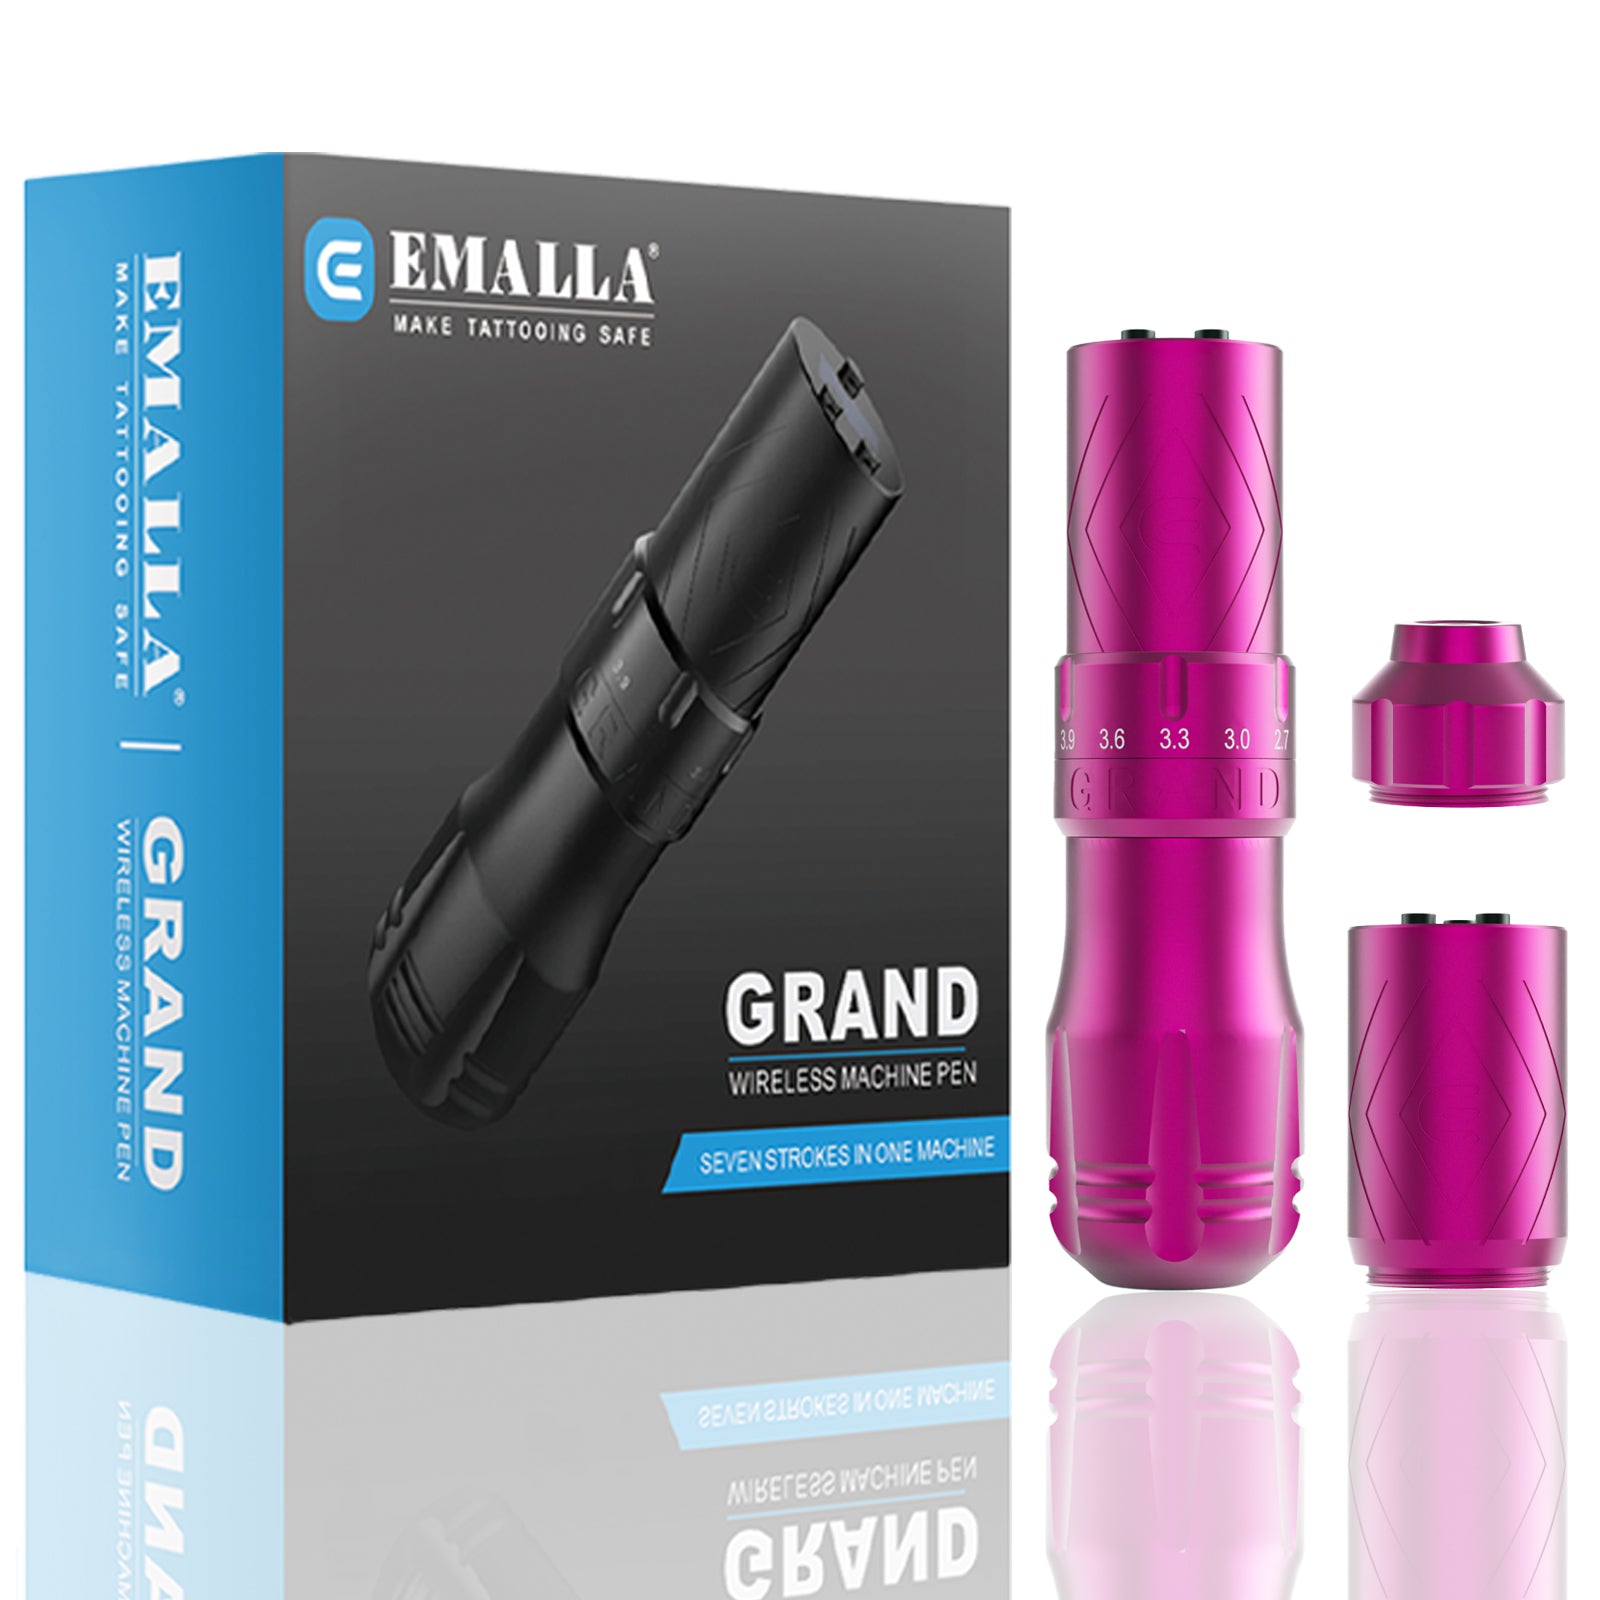 EMALLA GRAND Wireless Pen Machine 2 Battery Pack (PINK)